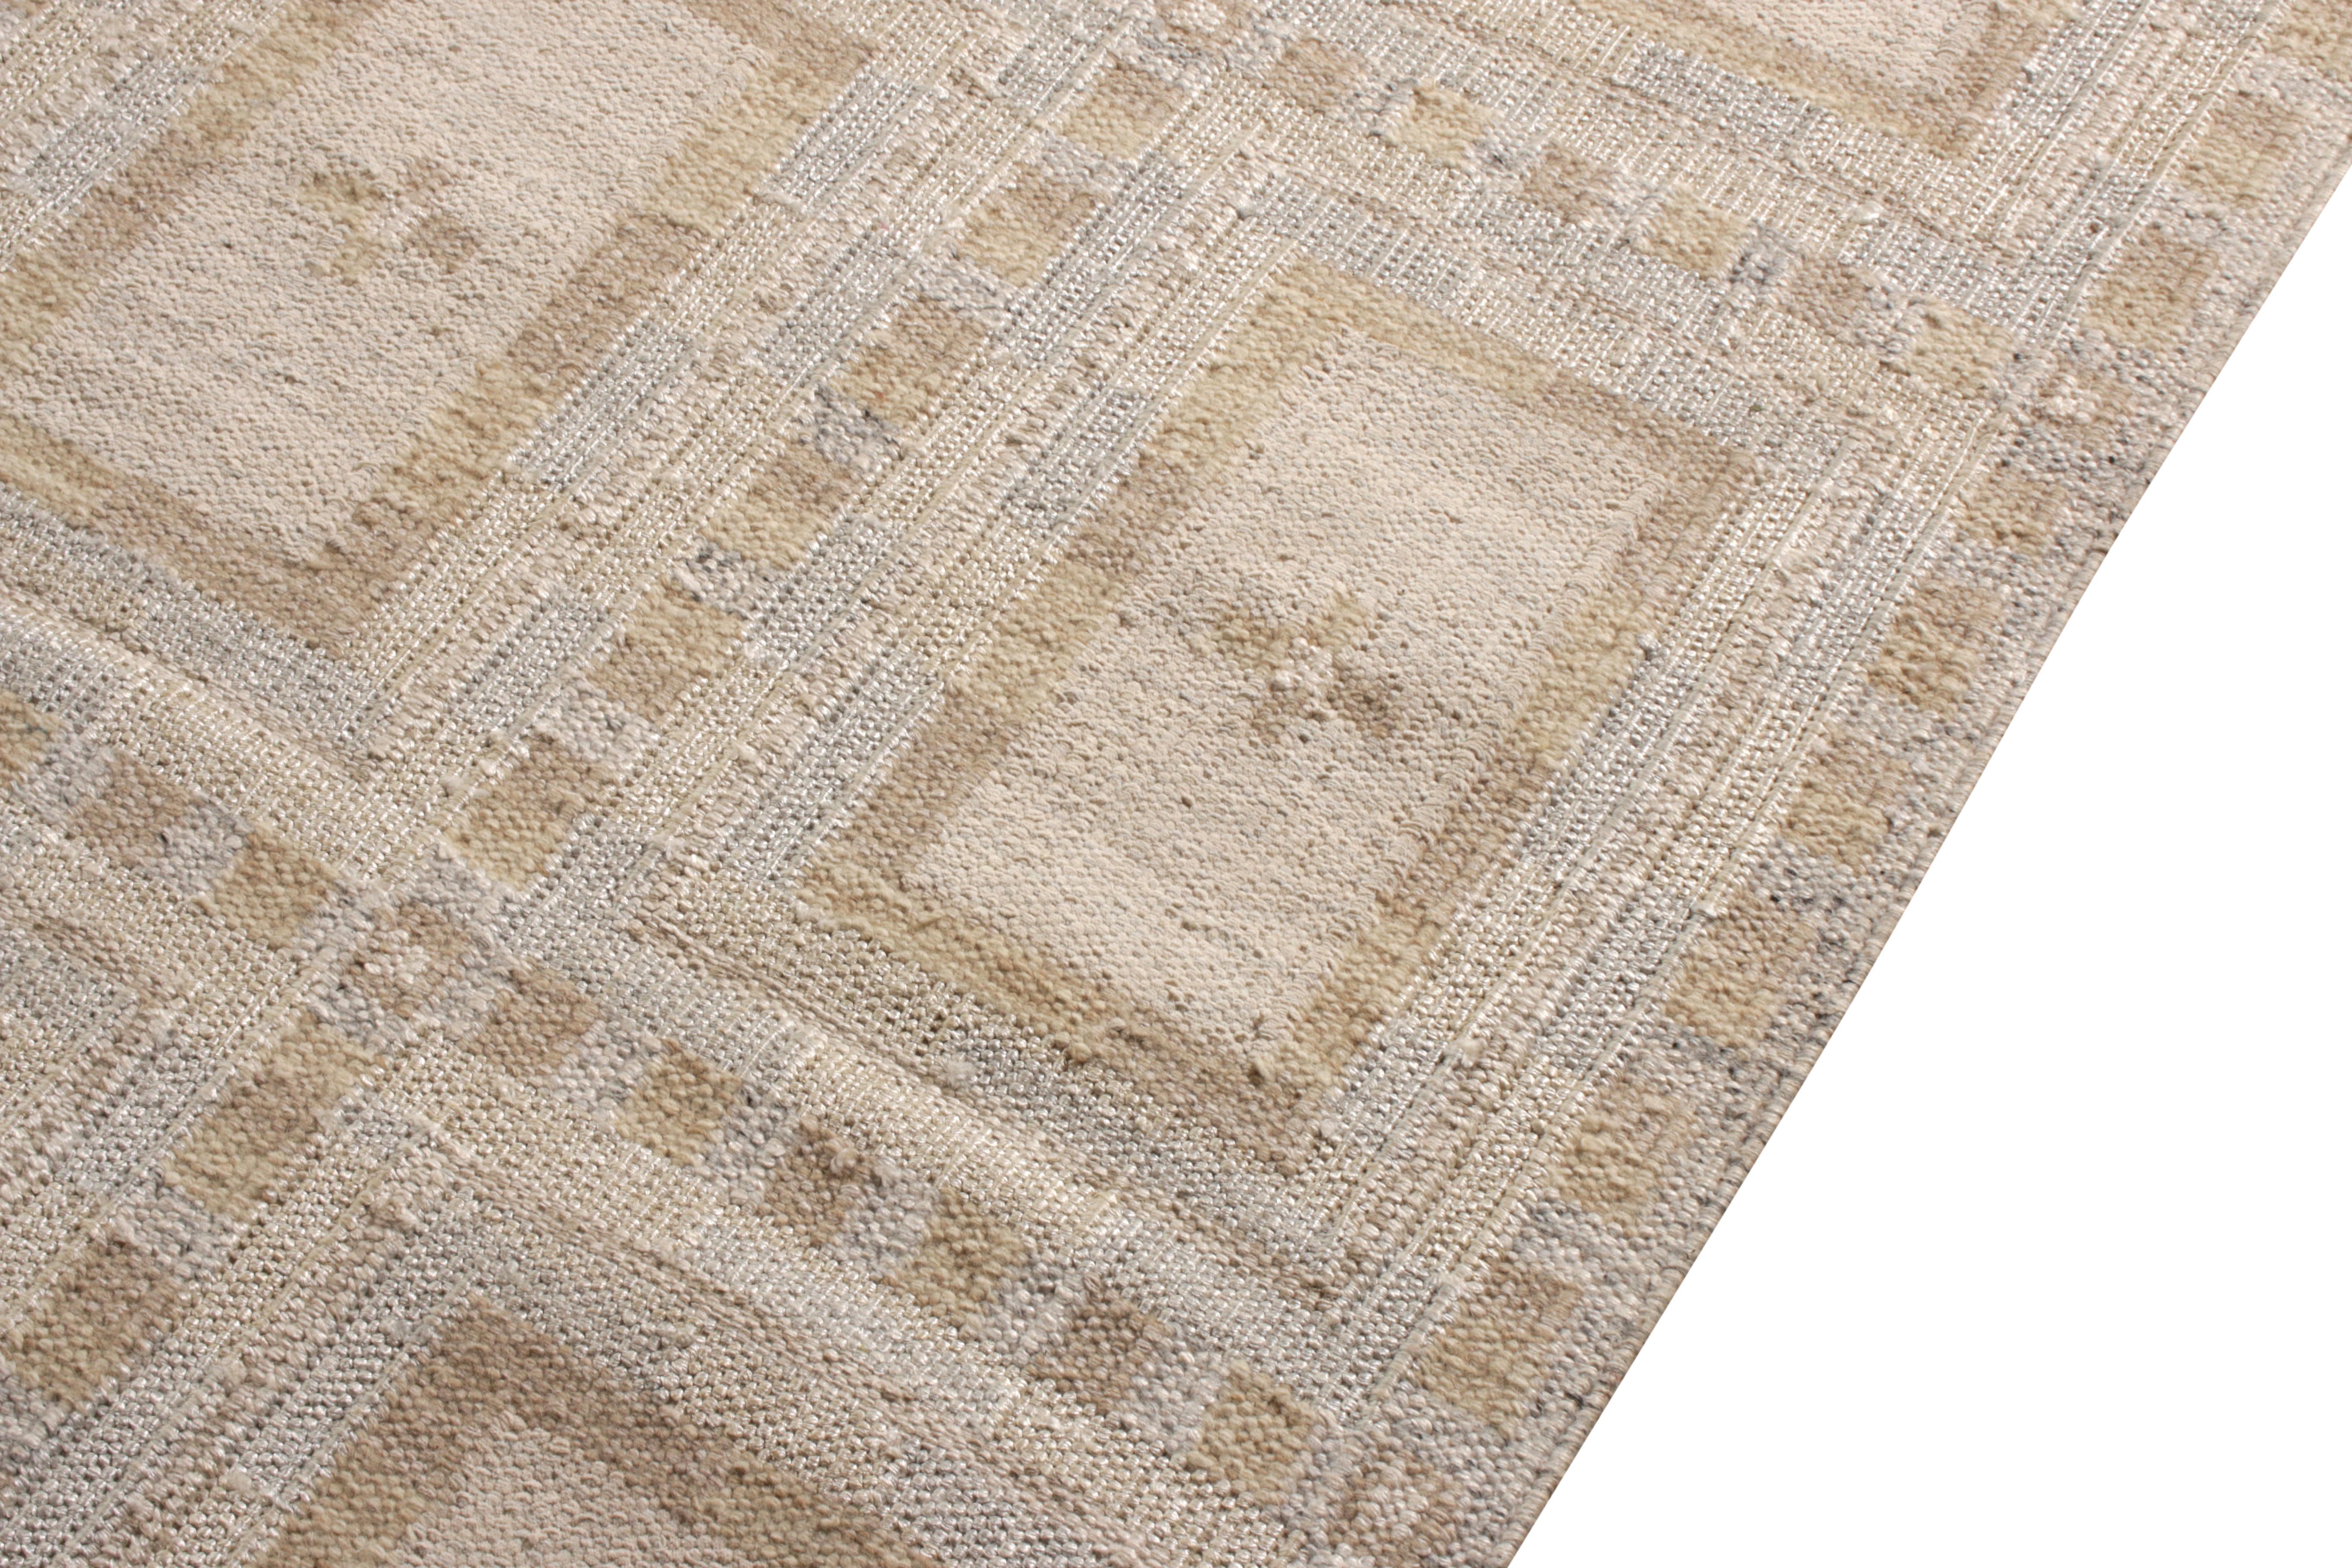 Indian Rug & Kilim’s Scandinavian Style Kilim Rug in Beige-Brown Geometric Pattern For Sale